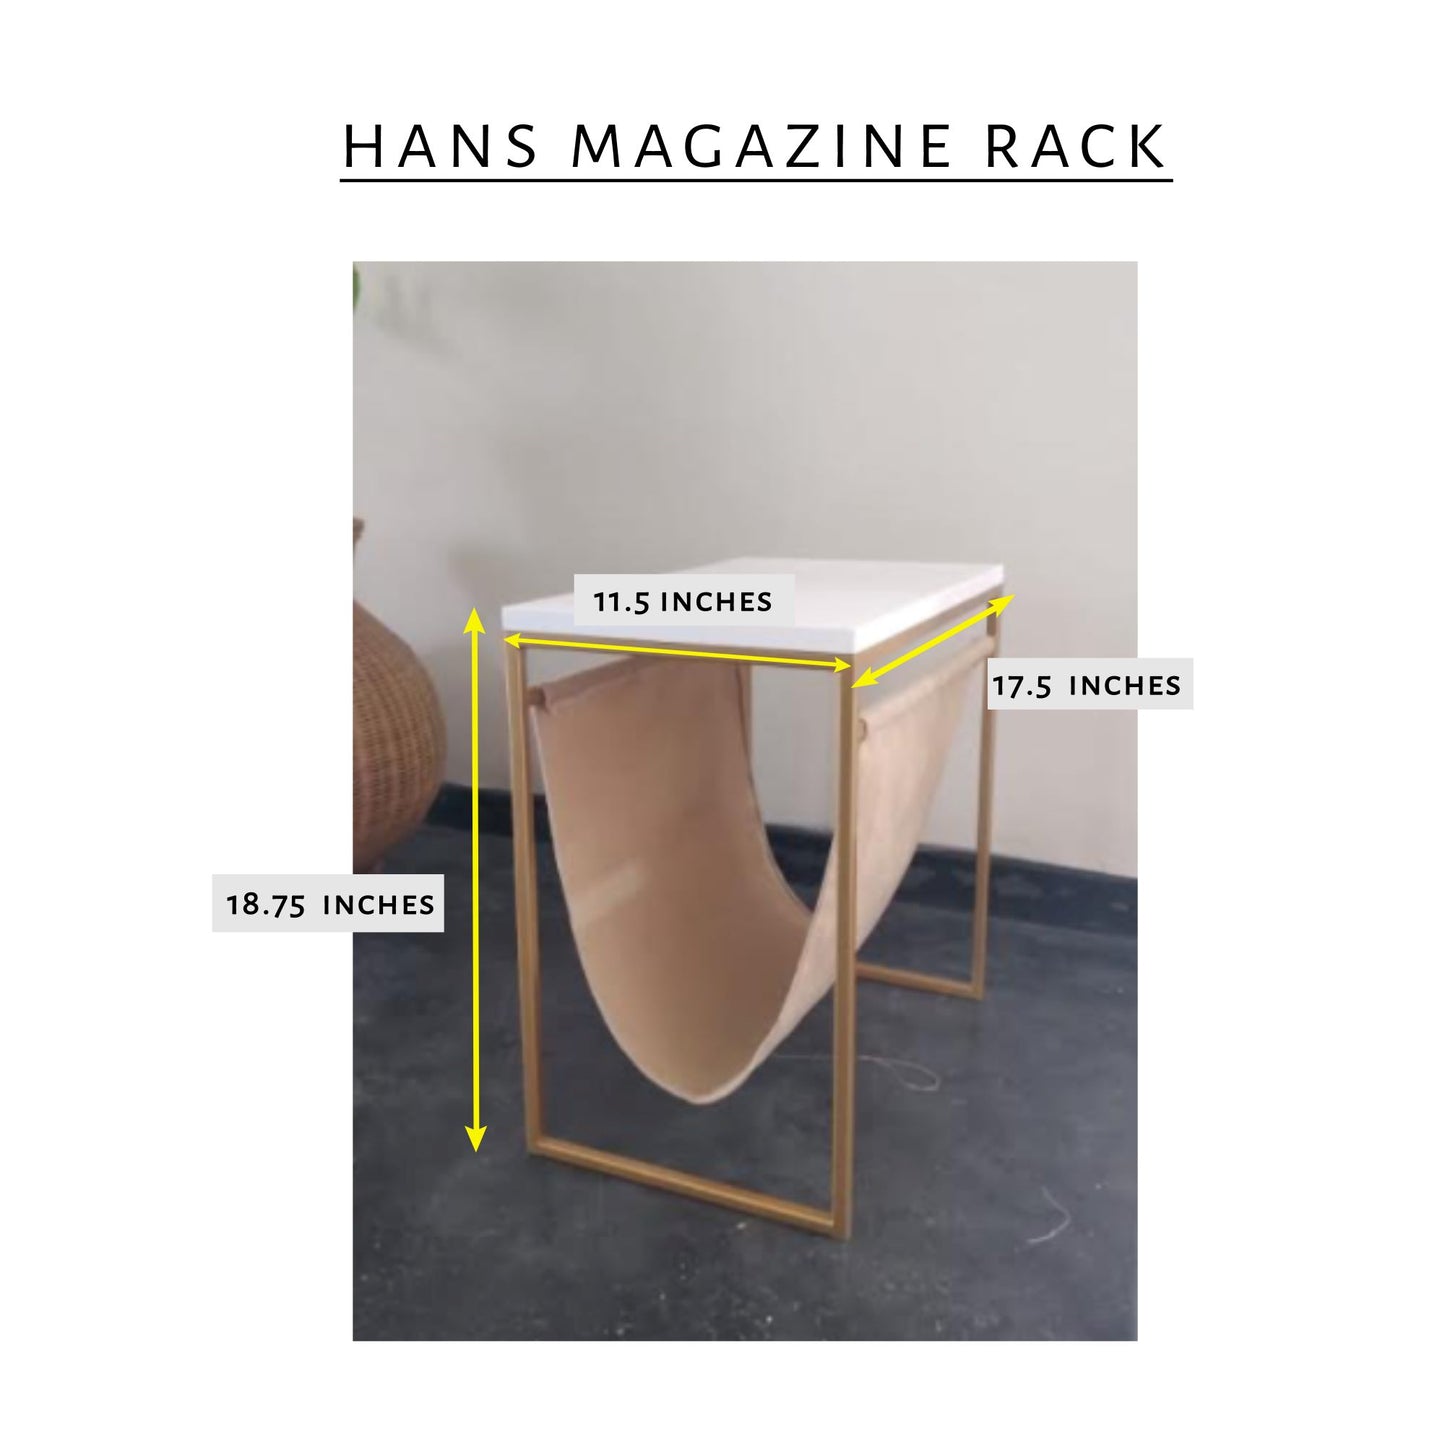 Hanz Magazine Rack